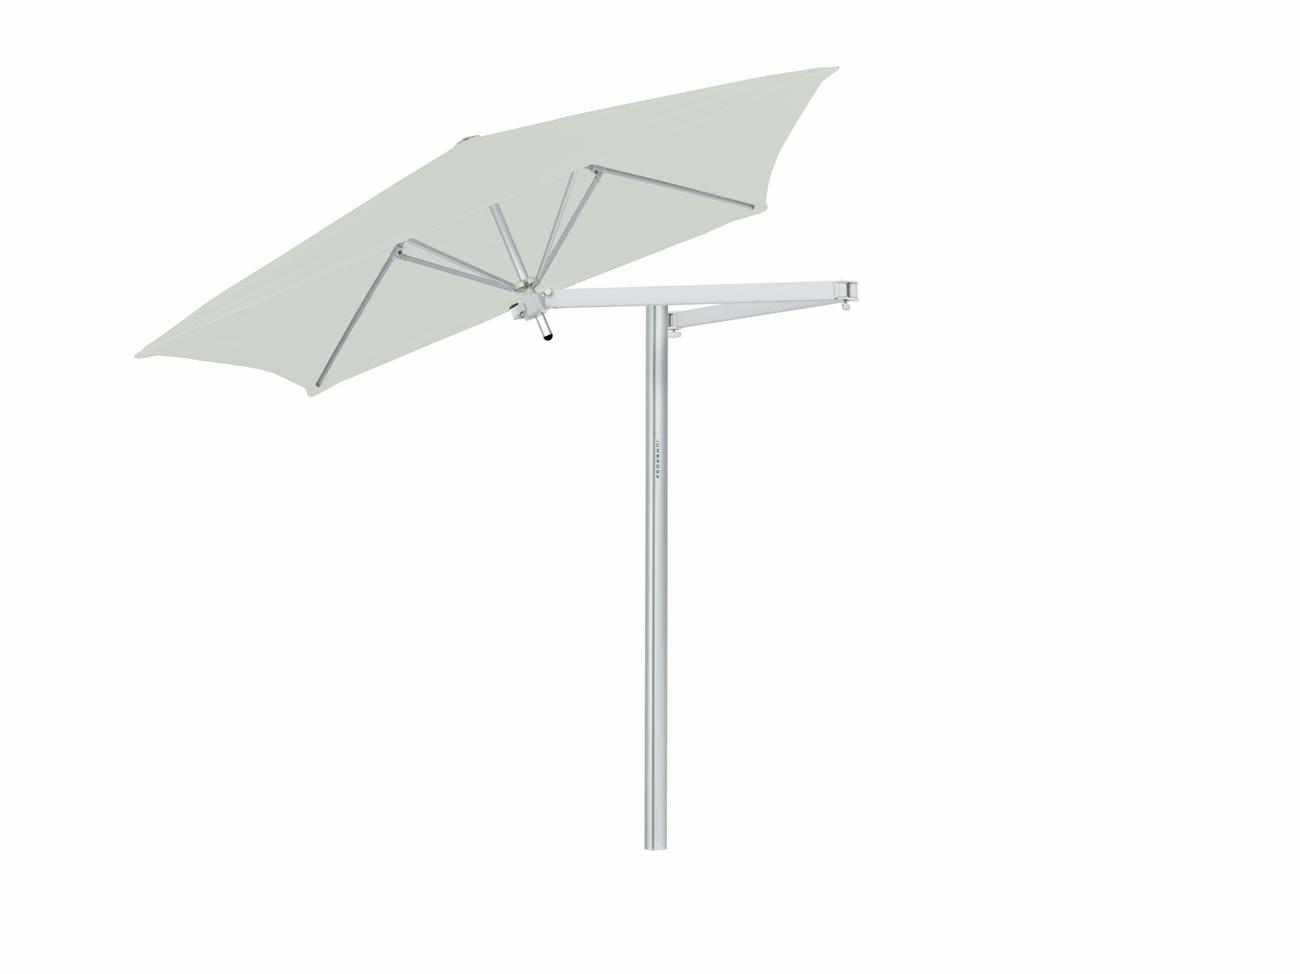 Paraflex cantilever umbrella square 1,9 m with Canvas fabric and a Neo arm